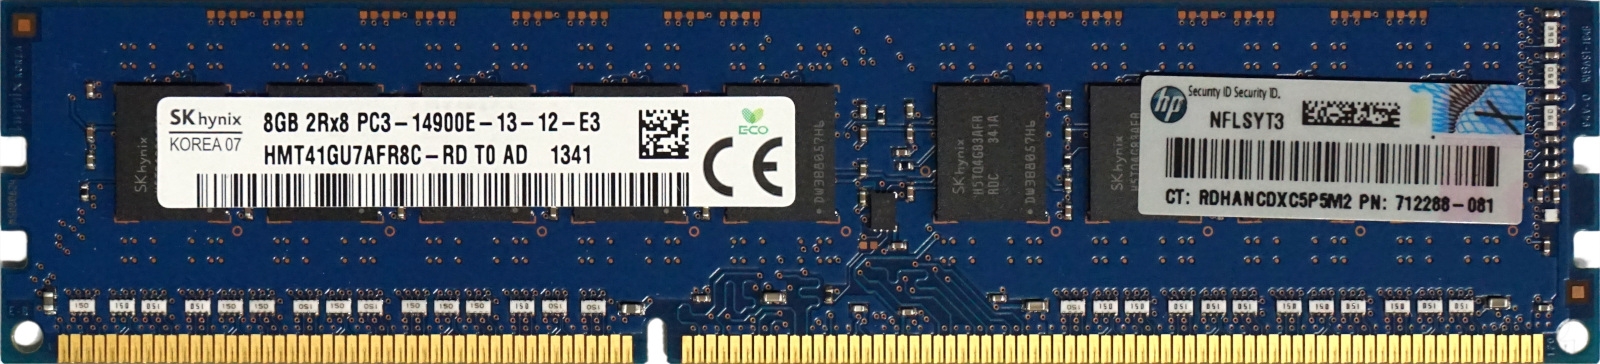 HP (712288-081) - 8GB PC3-14900E (DDR3-1866Mhz, 2RX8) ECC RAM 